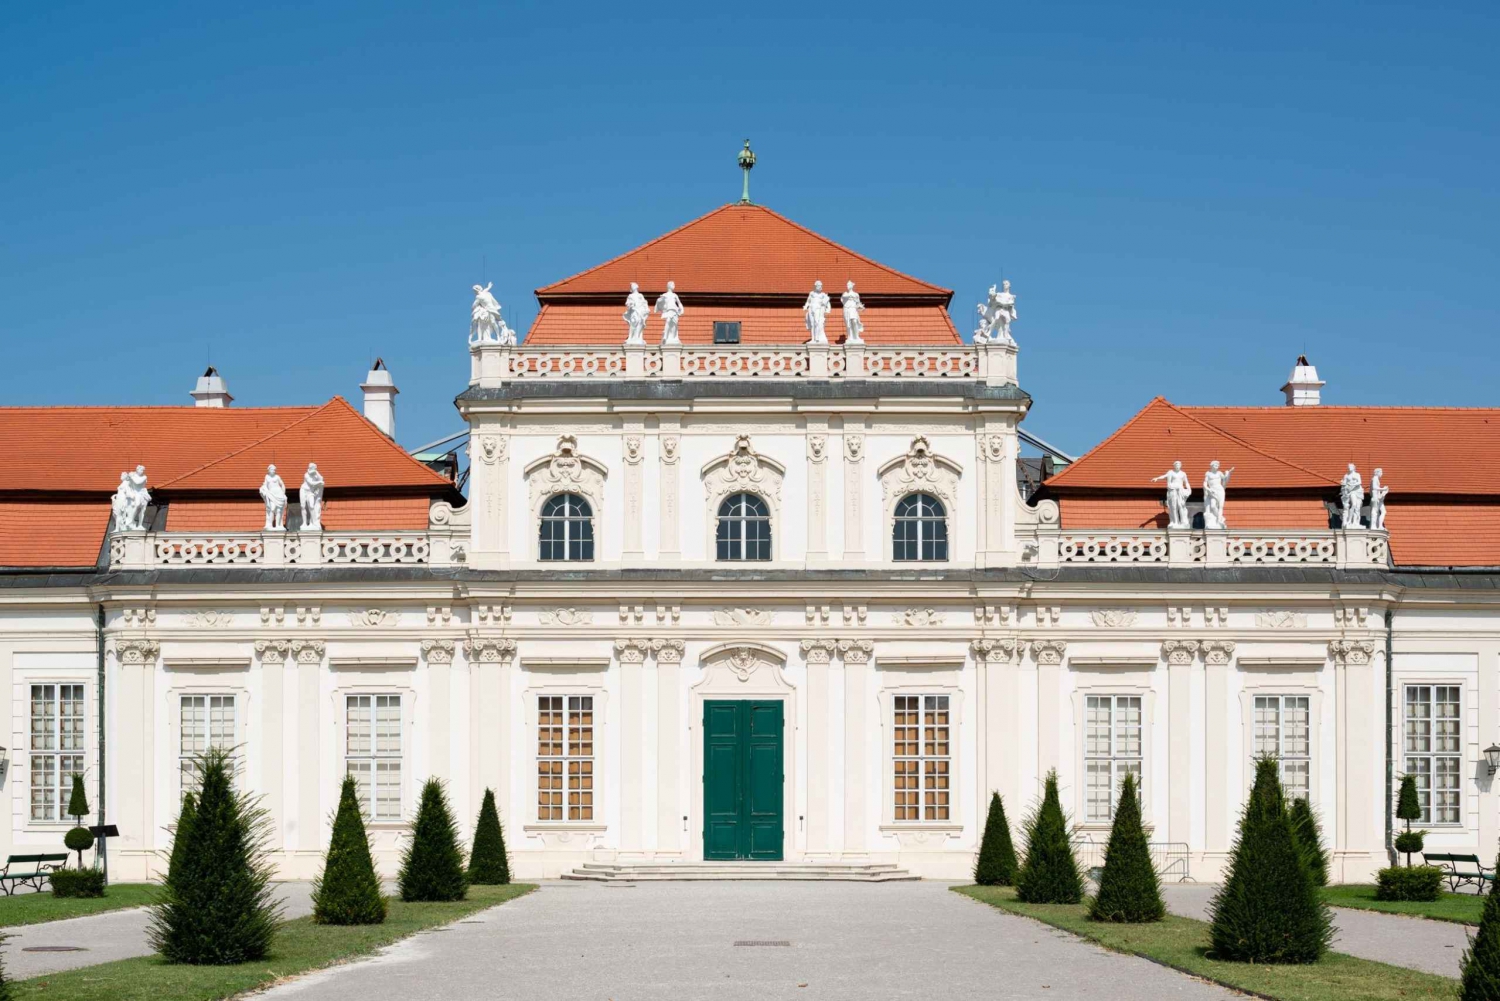 Vienna: Lower Belvedere Entry Ticket & Temporary Exhibitions